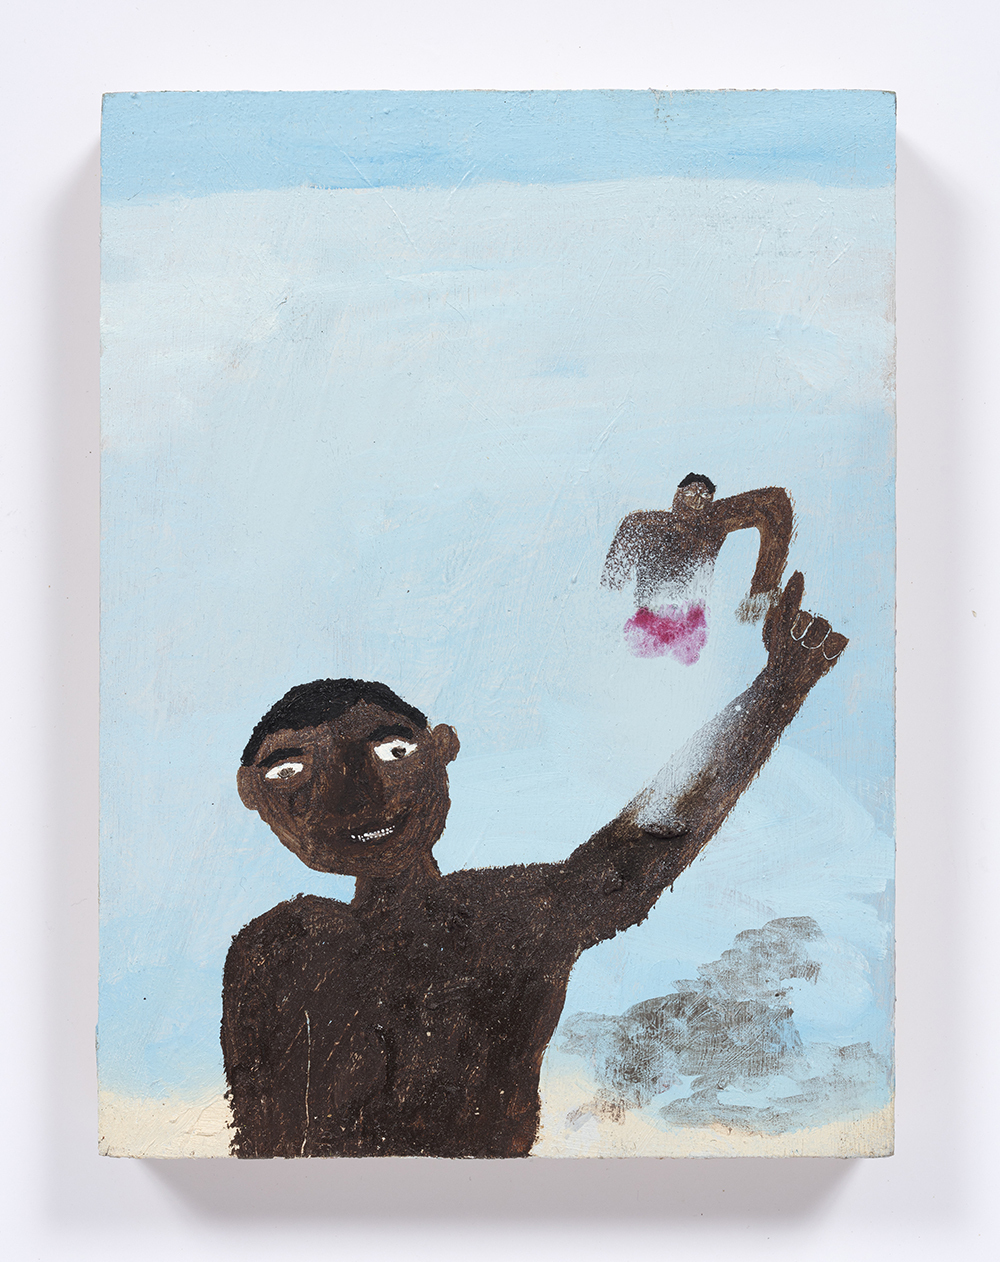 Marcus Leslie Singleton. Divani & Maykel, 2020. Oil on wood panel, 8 x 6 inches (20.3 x 15.2 cm)